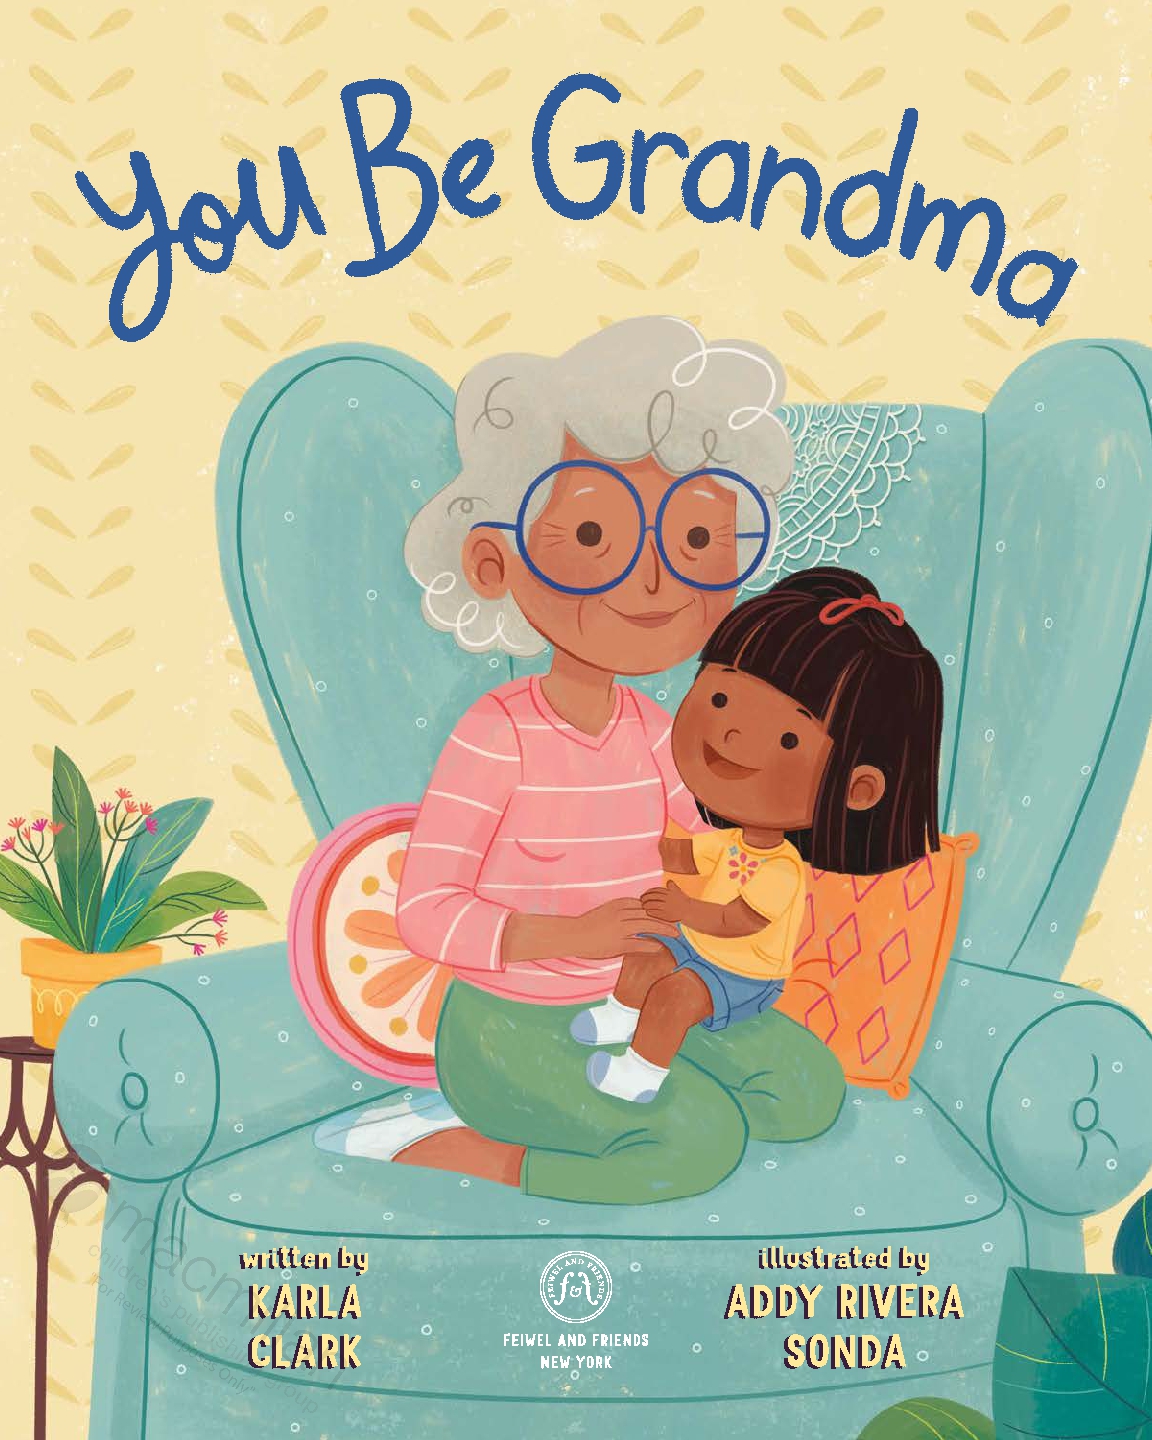 You Be Grandma